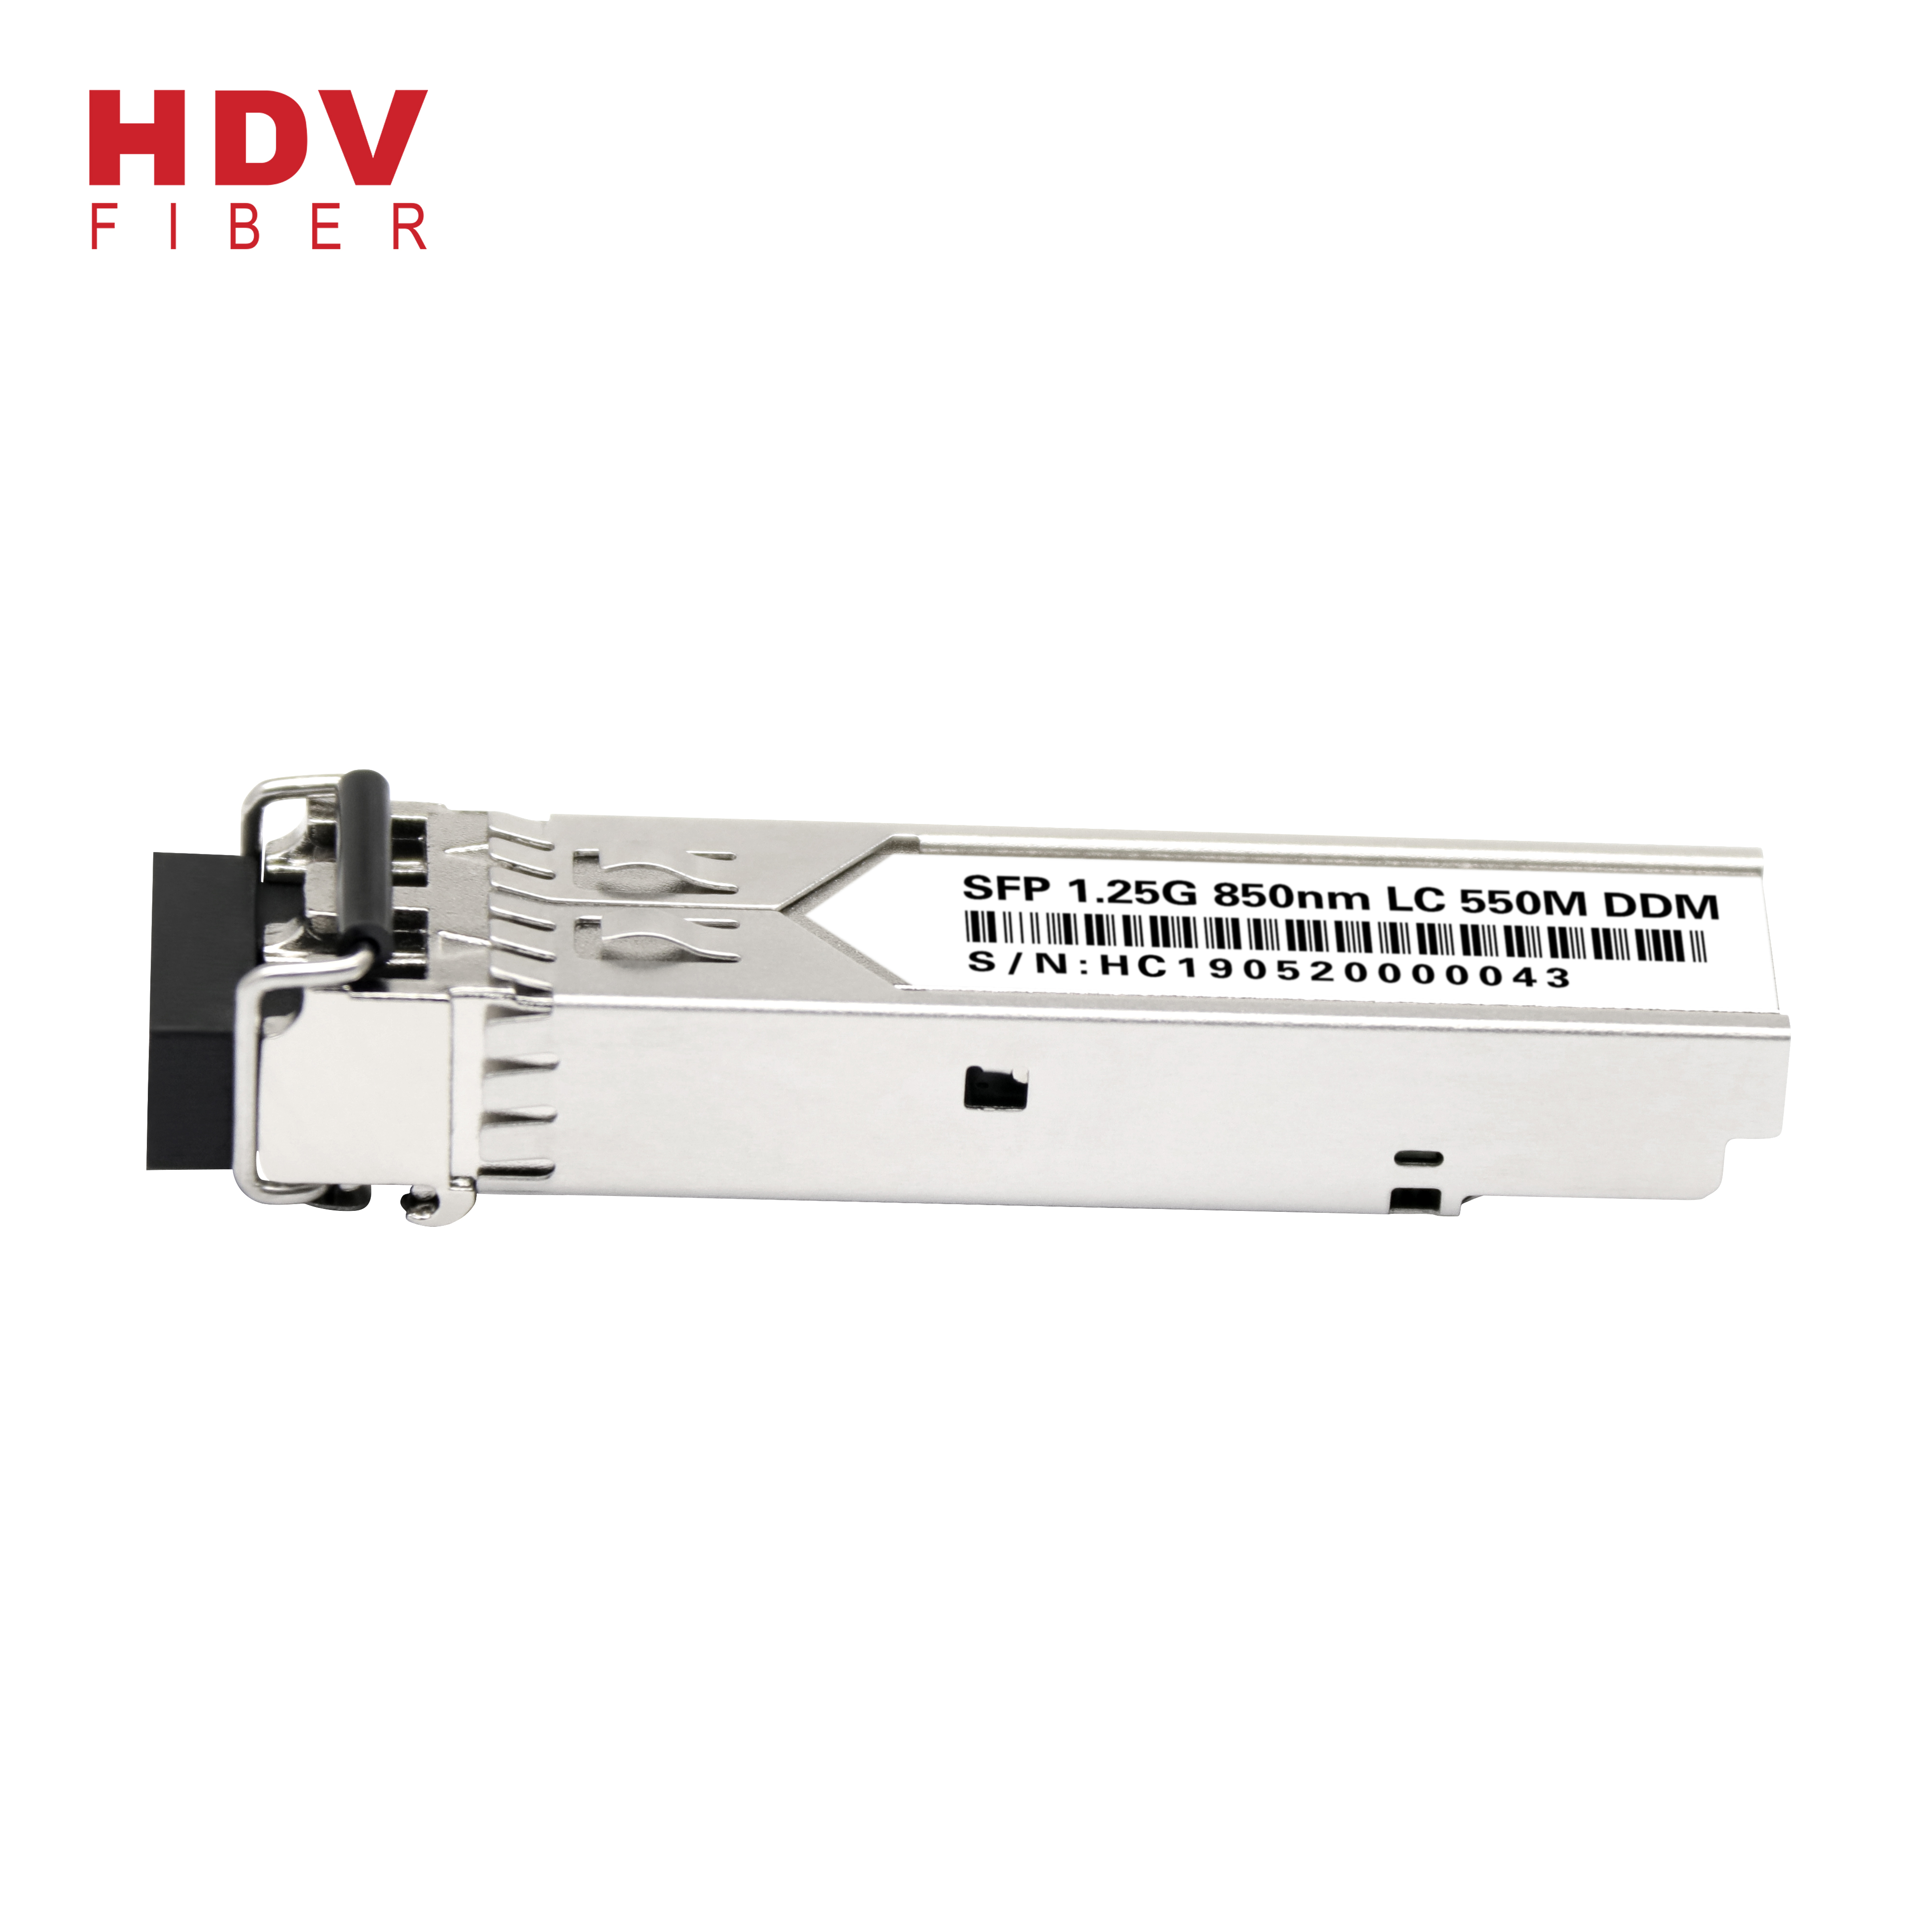 Bottom price Fiber Optic Transceiver - 1.25g Sfp Module 850nm Multi mode 550m Ddm Lc Interface Dual Mode Sfp Fiber Transceiver Module – HDV